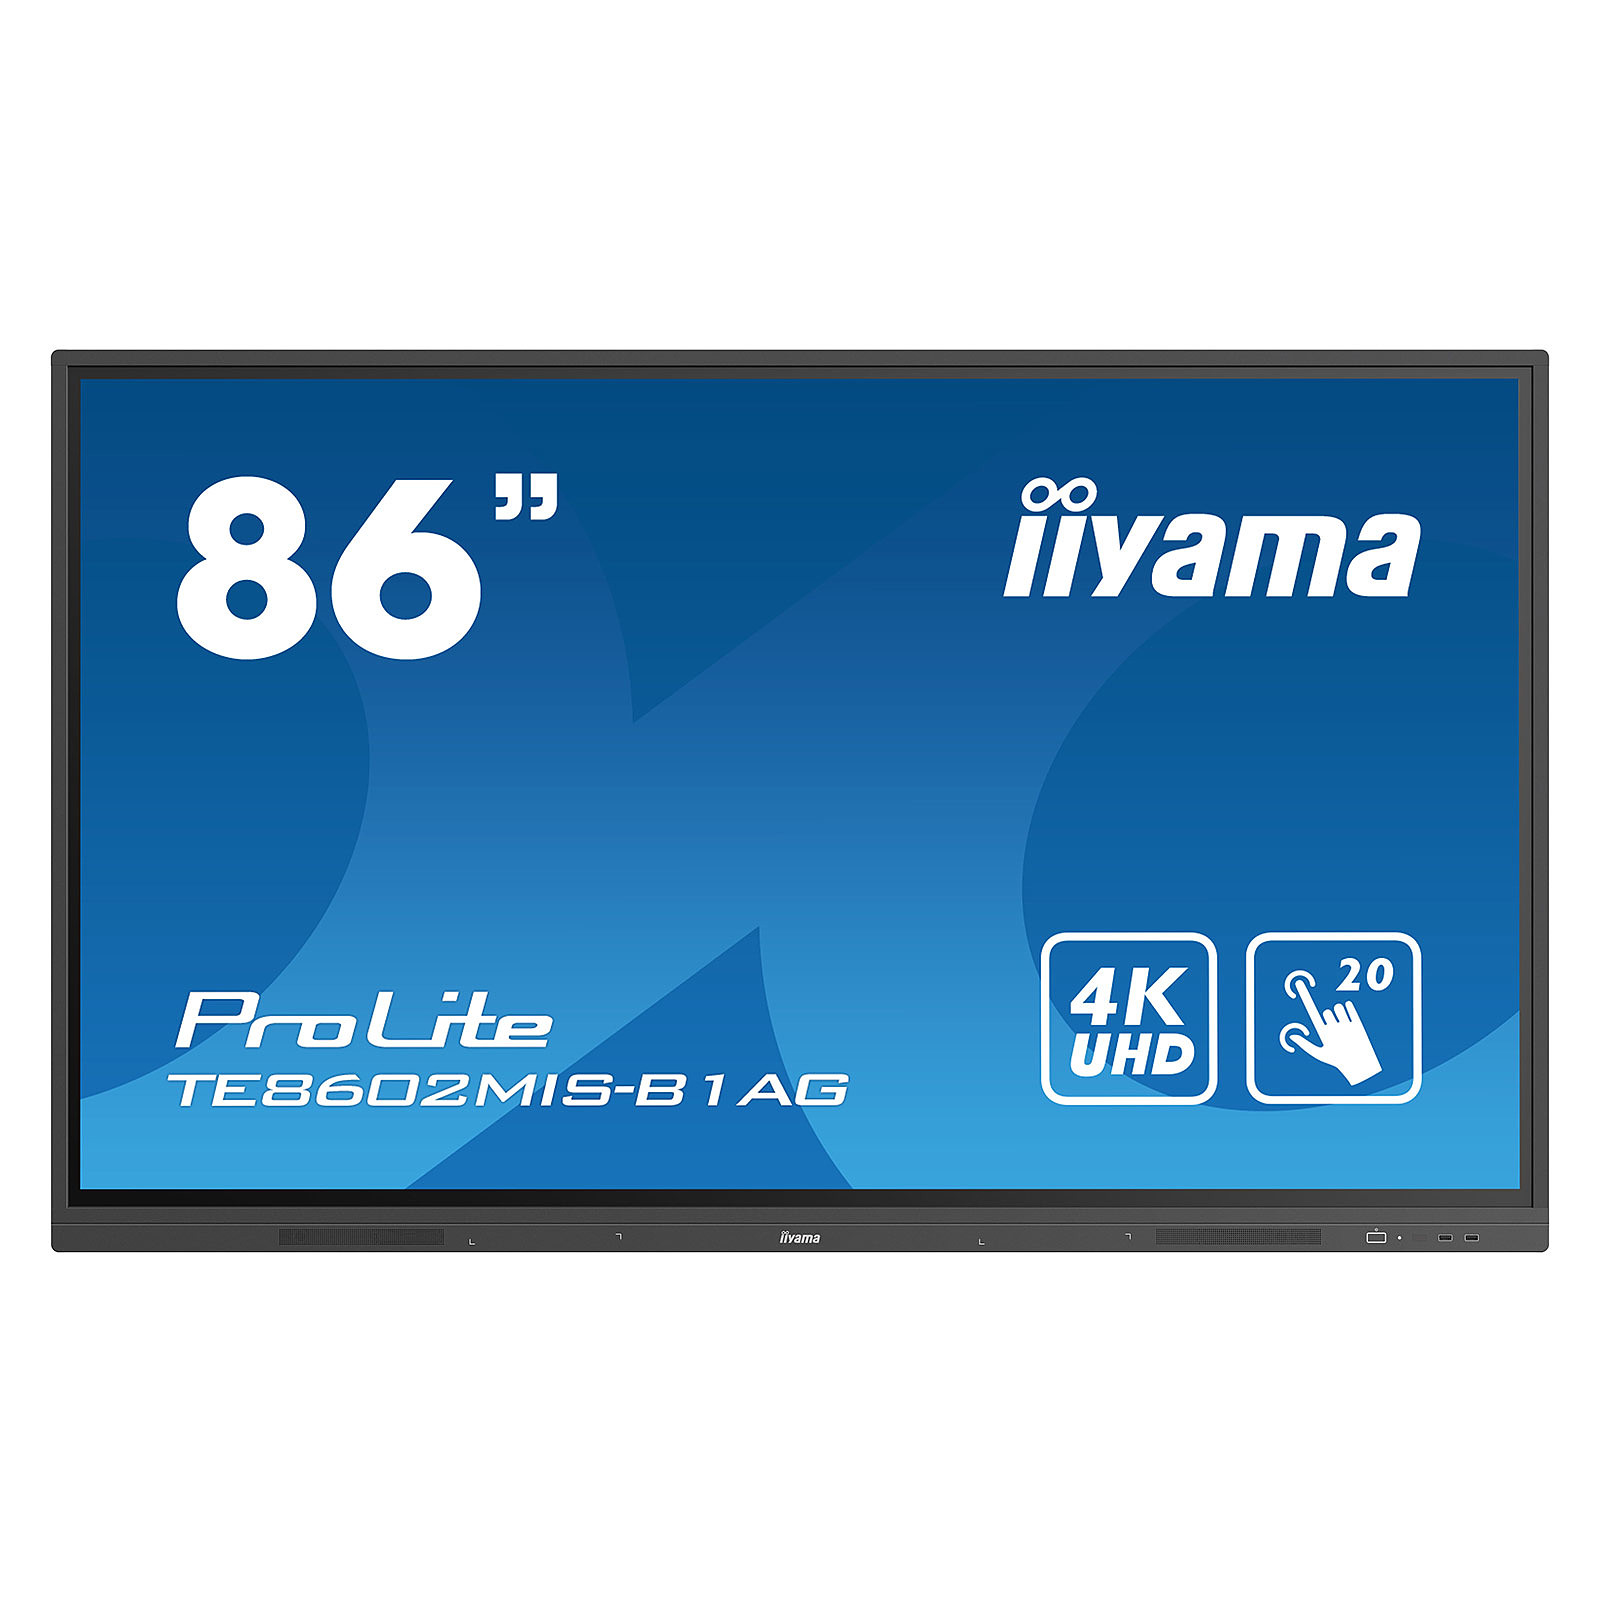 iiyama 86" LED - ProLite TE8602MIS-B1AG - Ecran dynamique iiyama